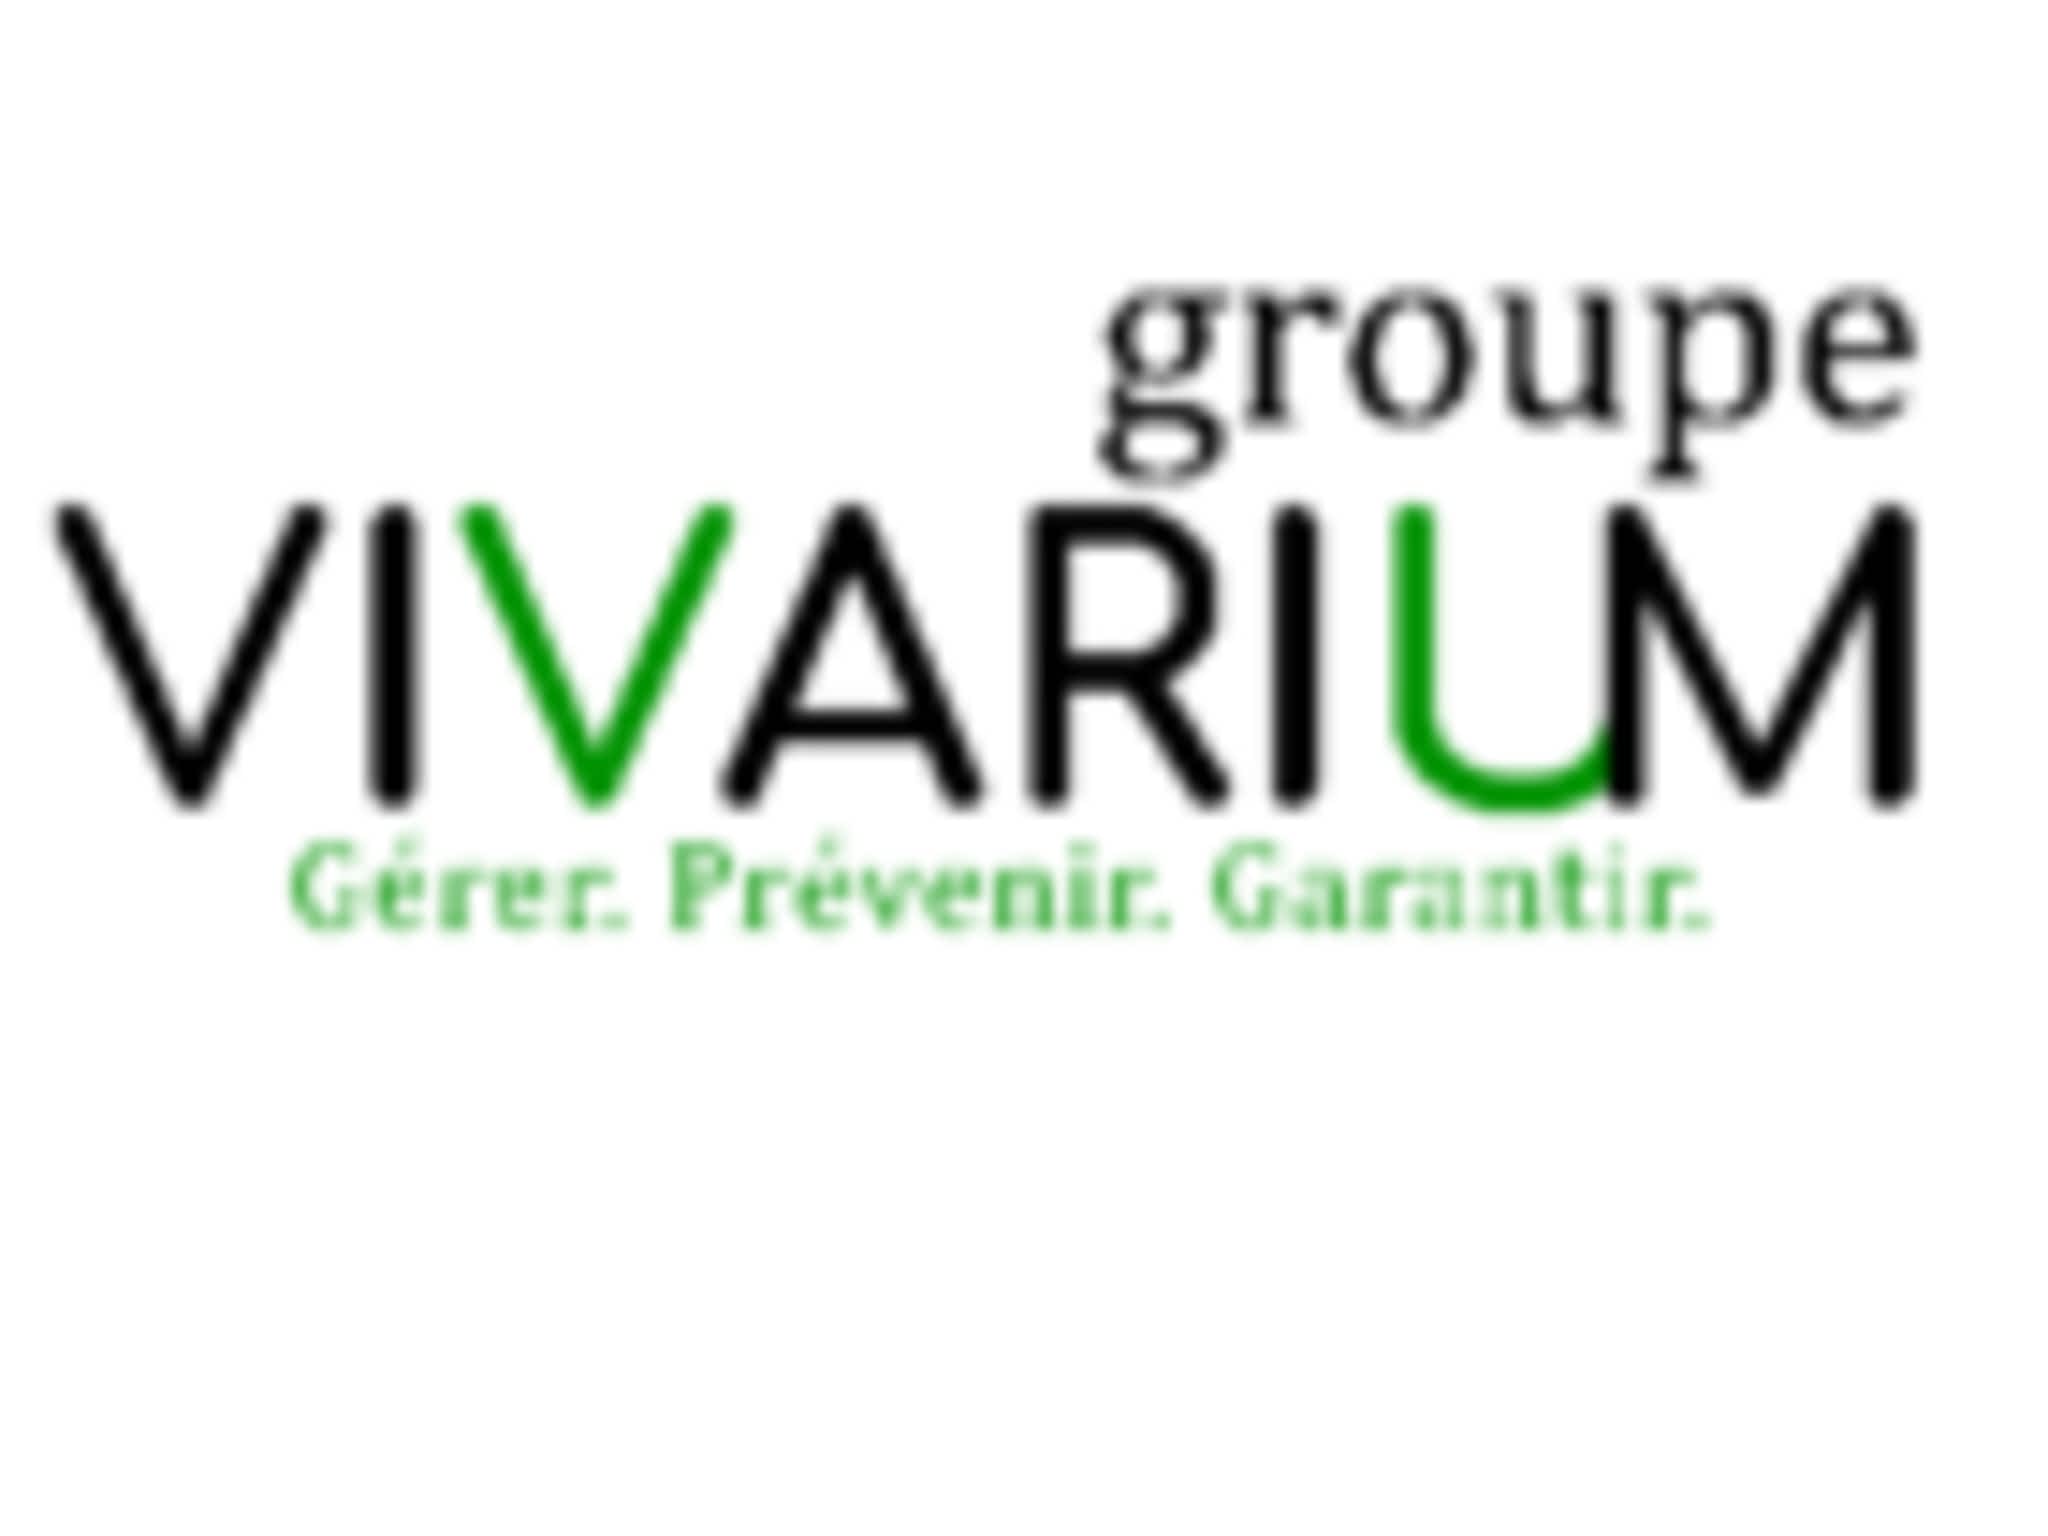 photo Groupe Vivarium Extermination